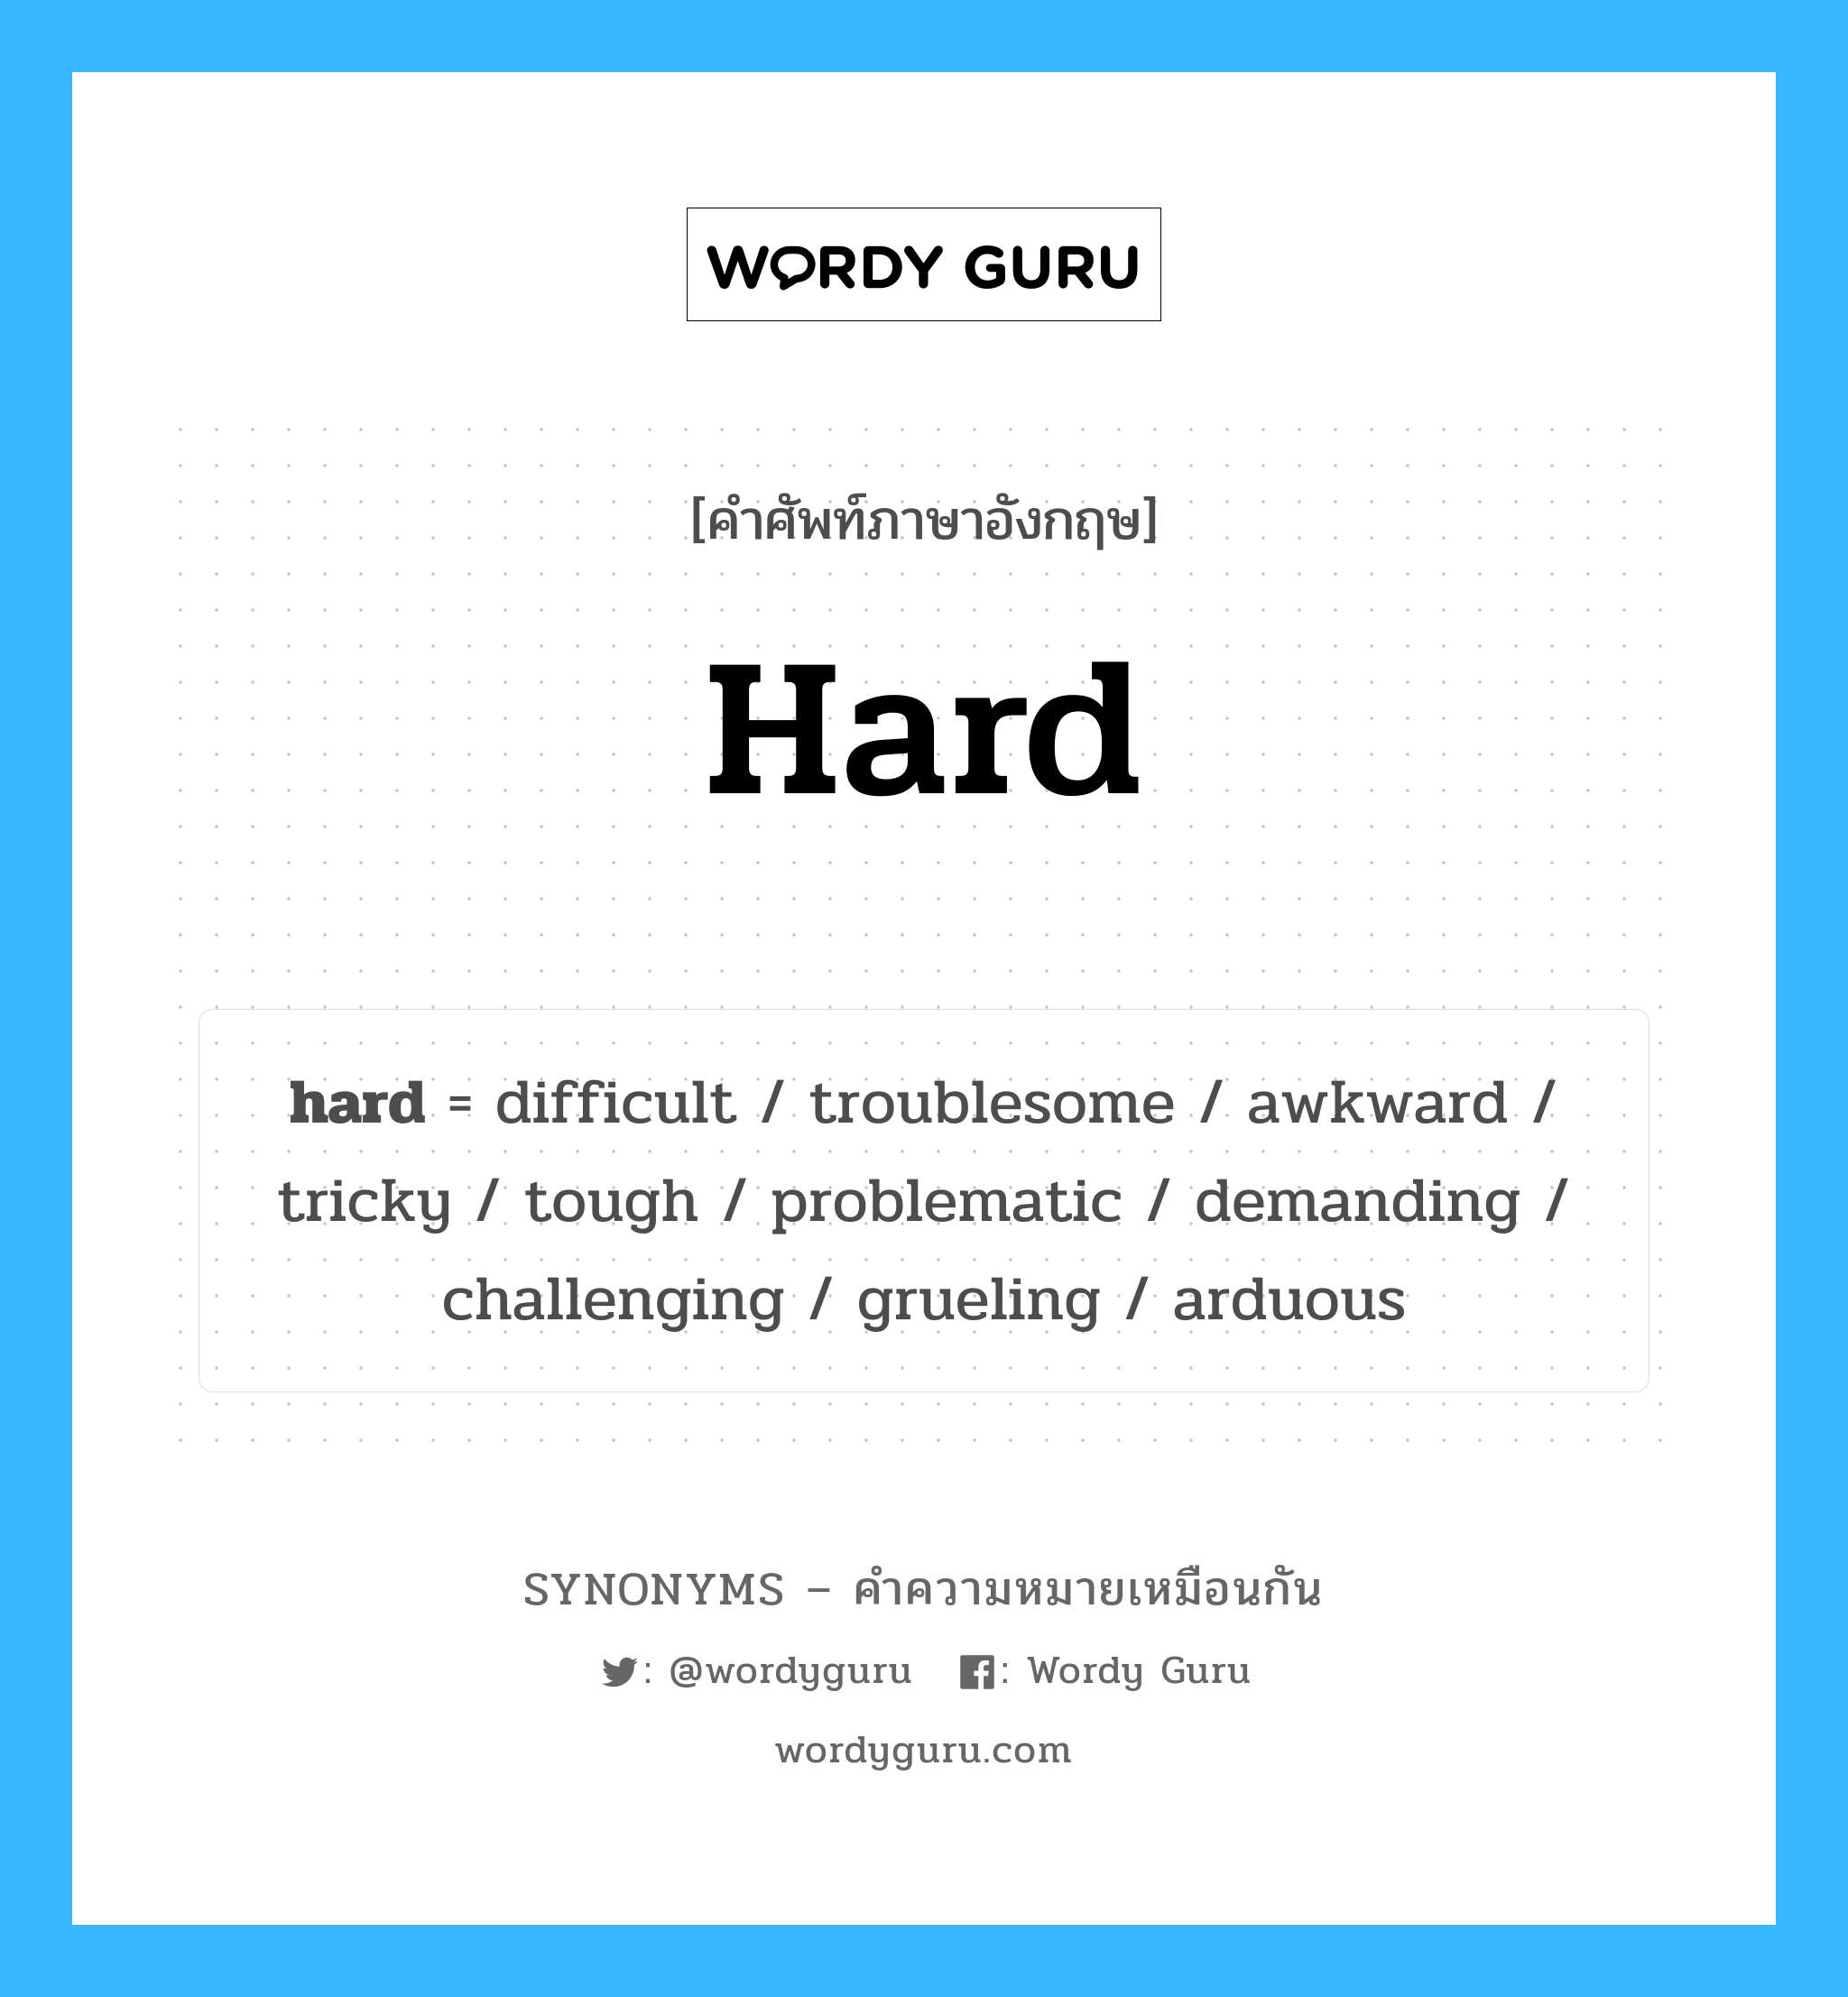 awkward เป็นหนึ่งใน hard และมีคำอื่น ๆ อีกดังนี้, คำศัพท์ภาษาอังกฤษ awkward ความหมายคล้ายกันกับ hard แปลว่า อึดอัดใจ หมวด hard